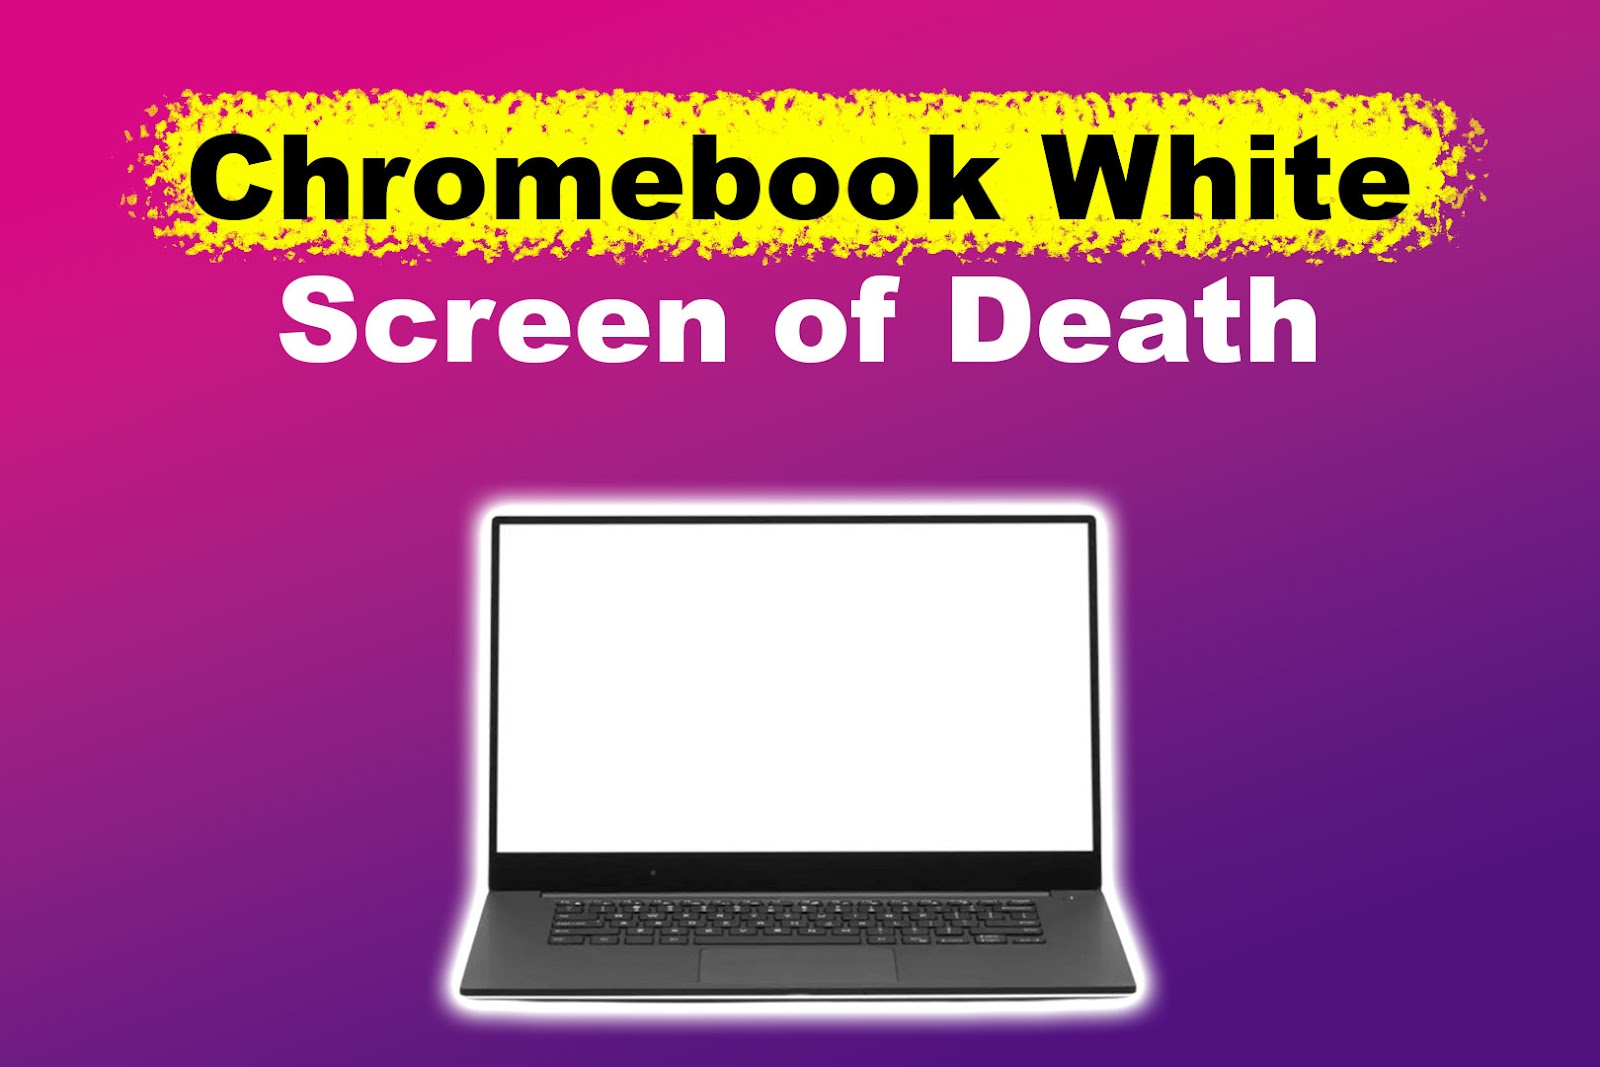 Chromebook White Screen of Death